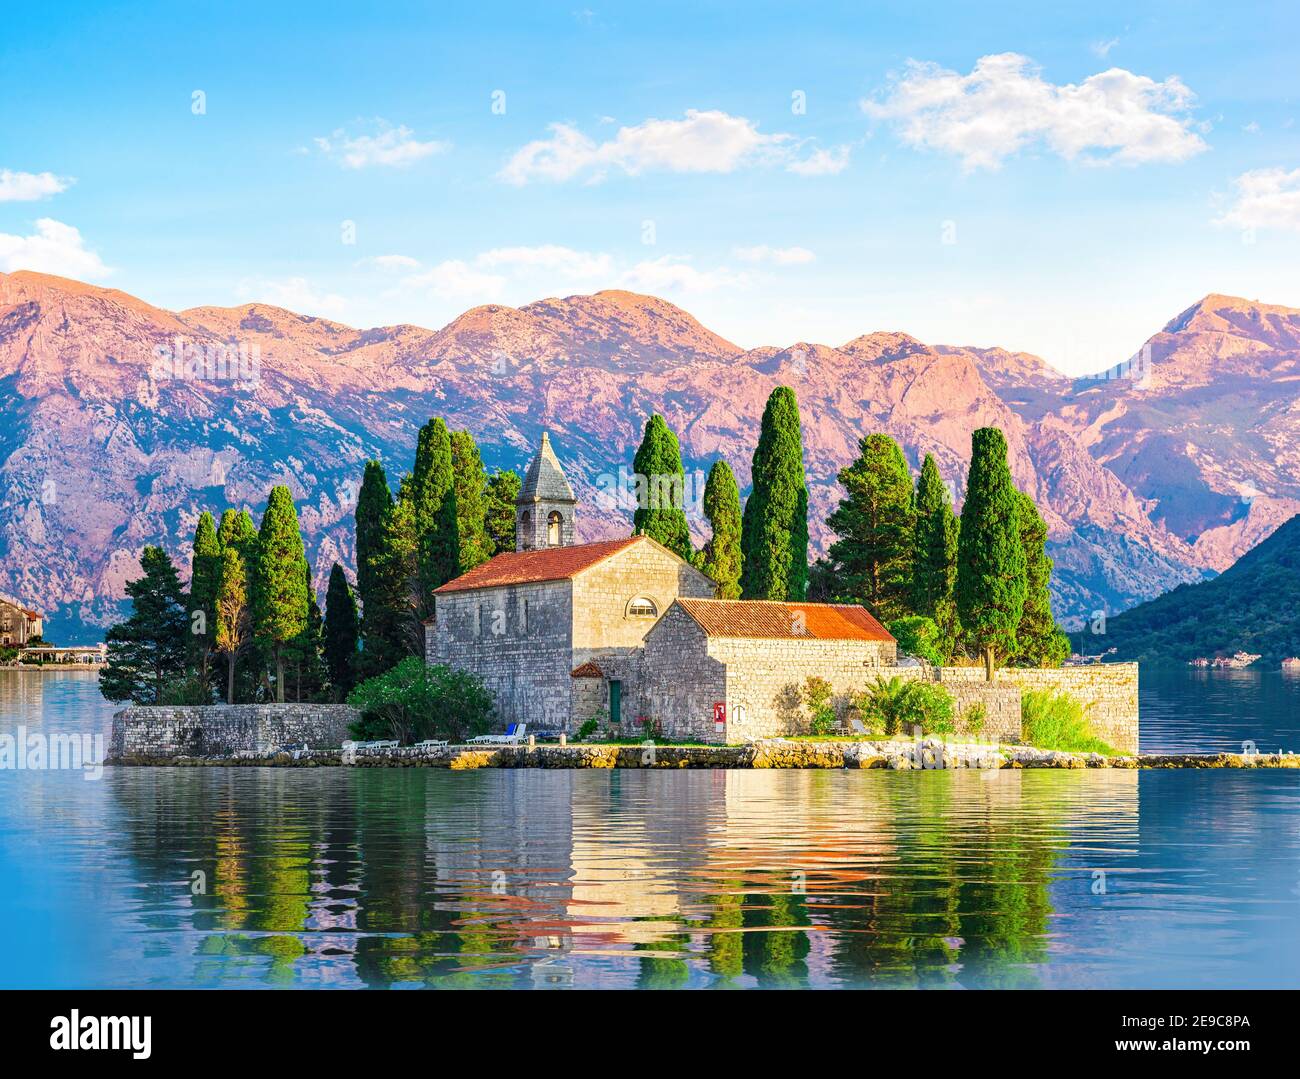 Island of Saint George among the mountains of Perast, Montenegro. Stock Photo